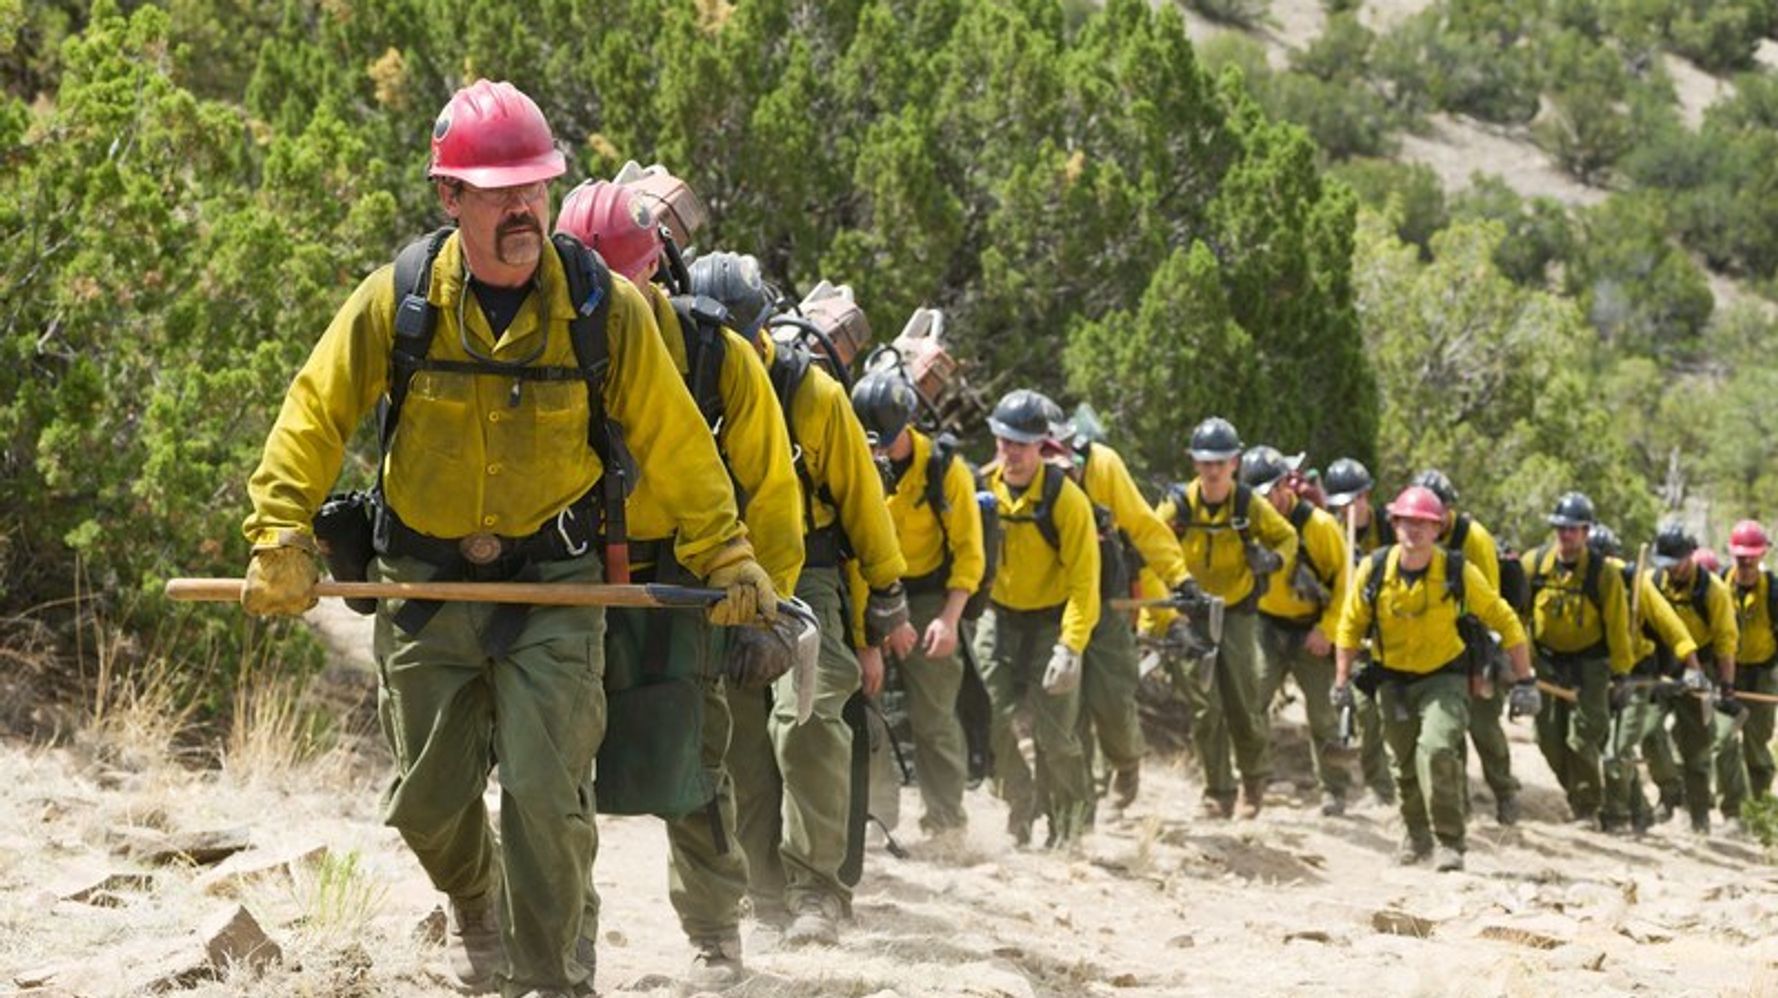 Josh Brolin on the Arizona Firefighter Movie "Only the Brave" | HuffPost